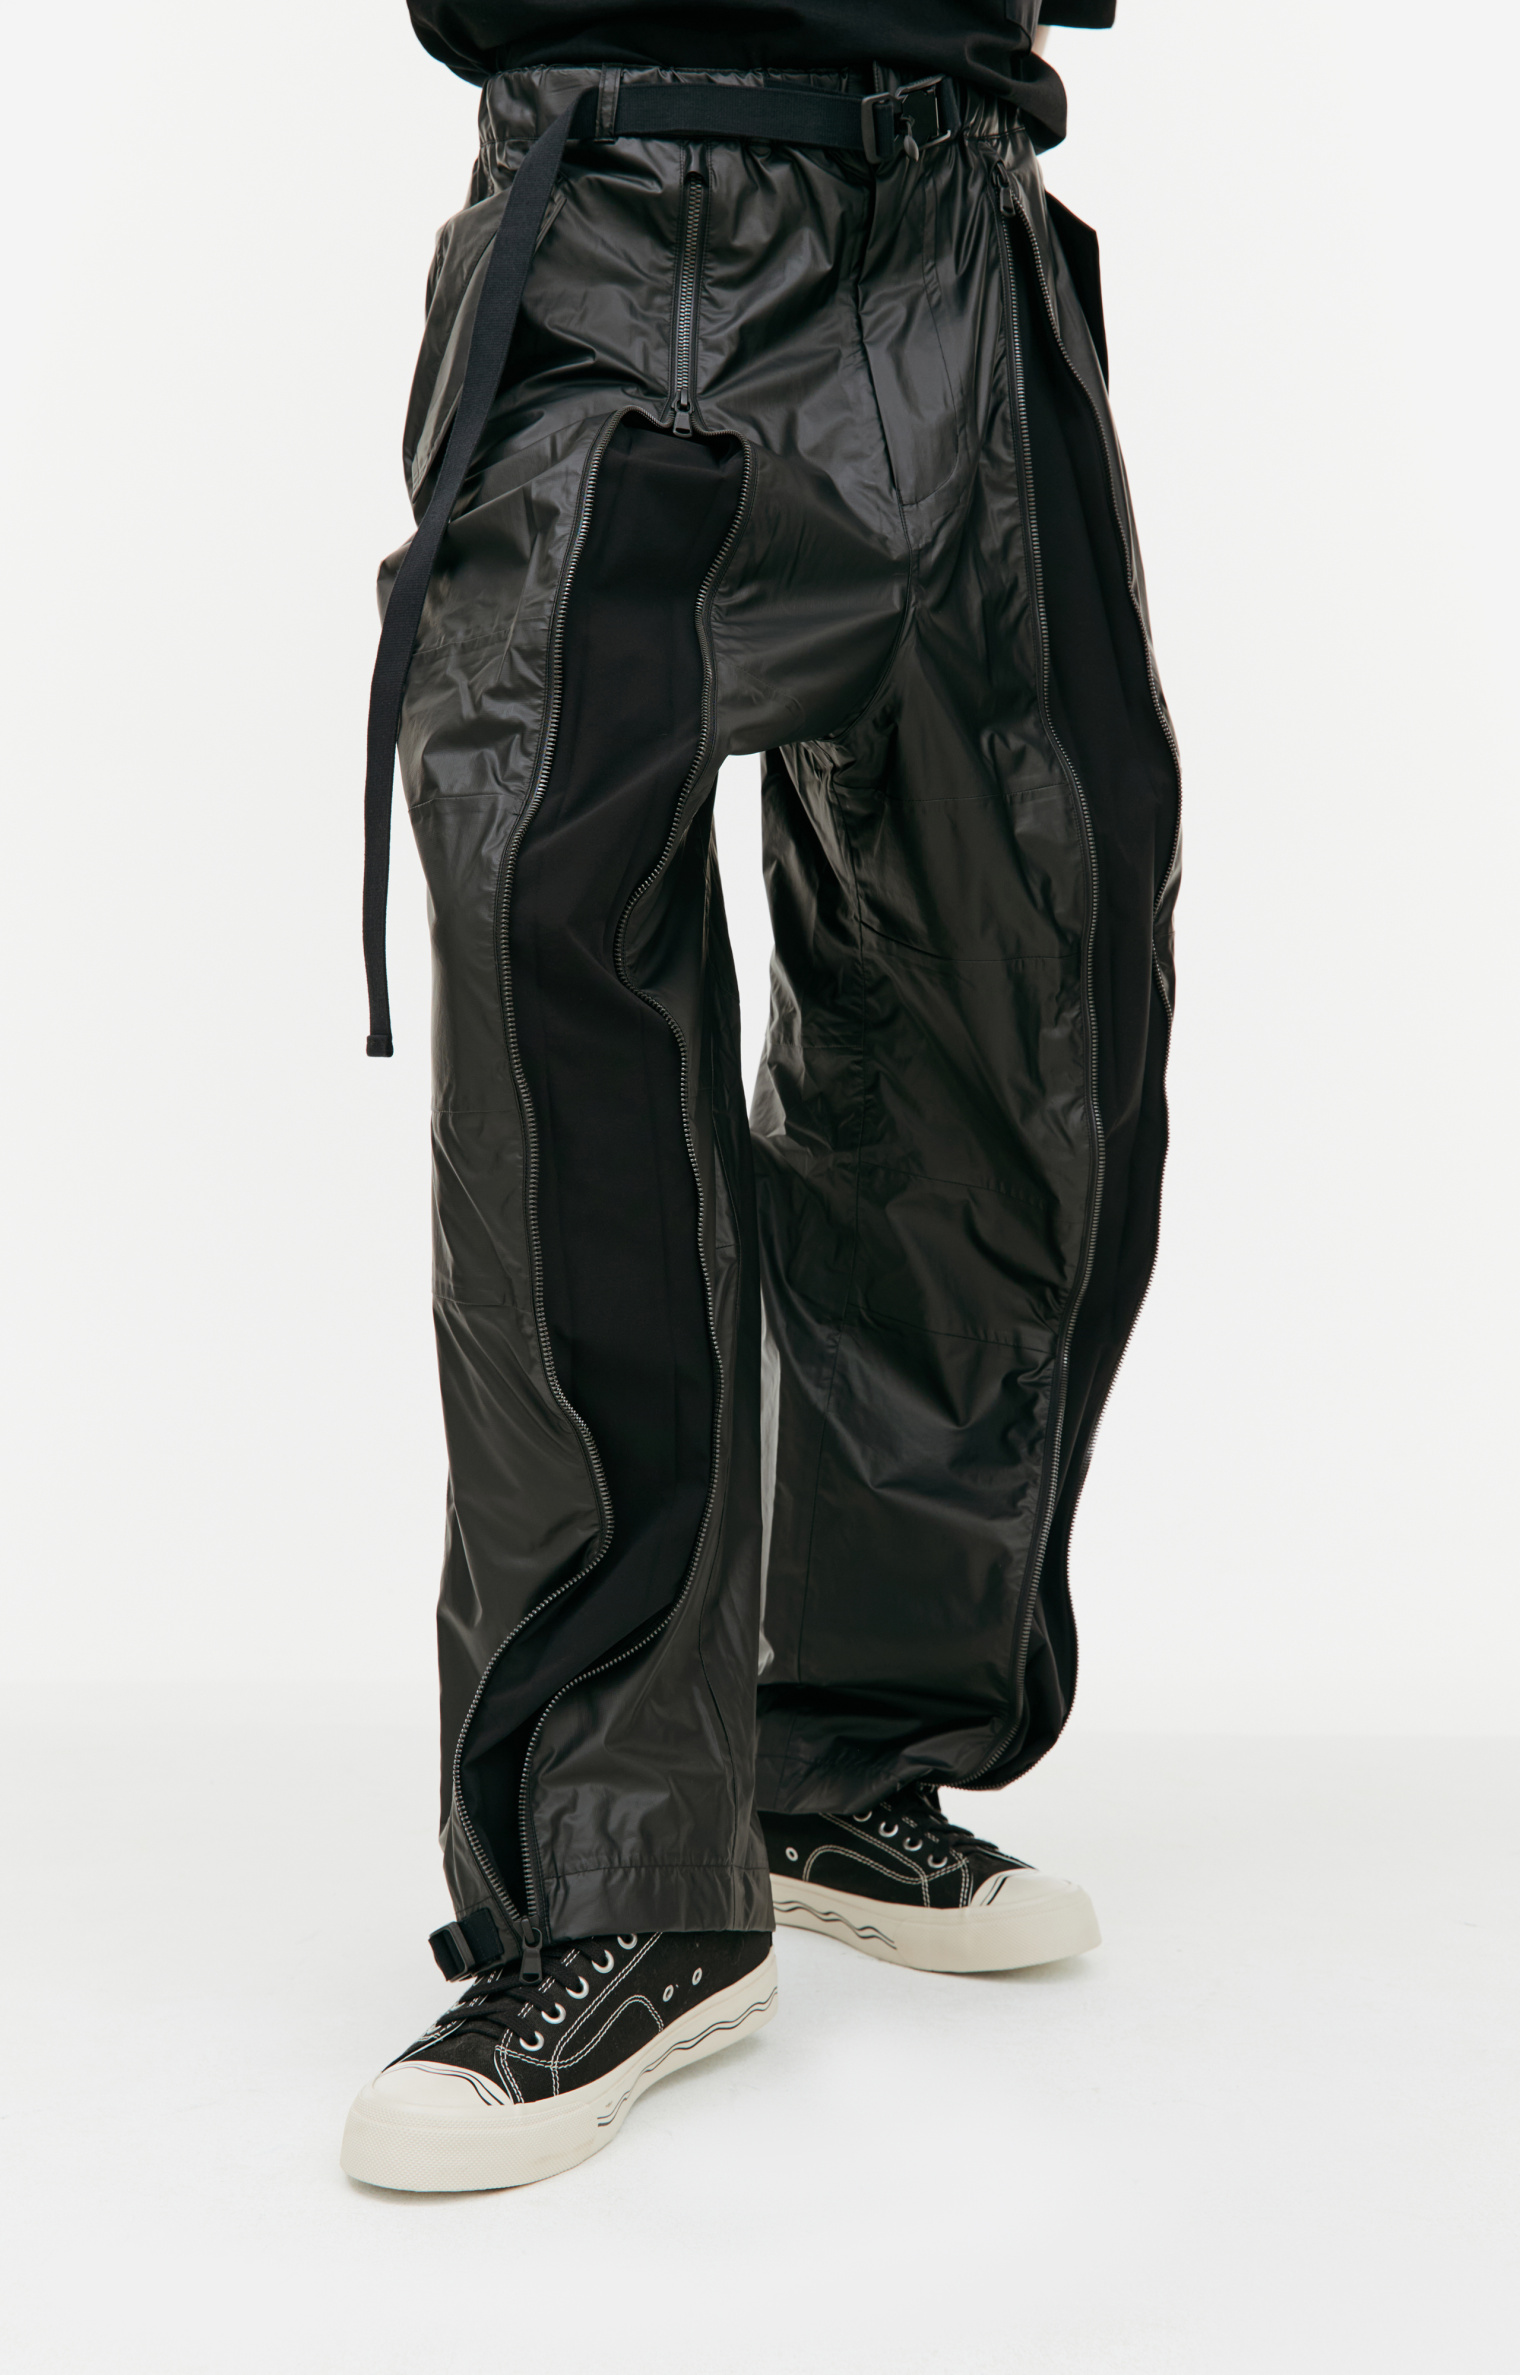 The Viridi-Anne Nylon zip trousers